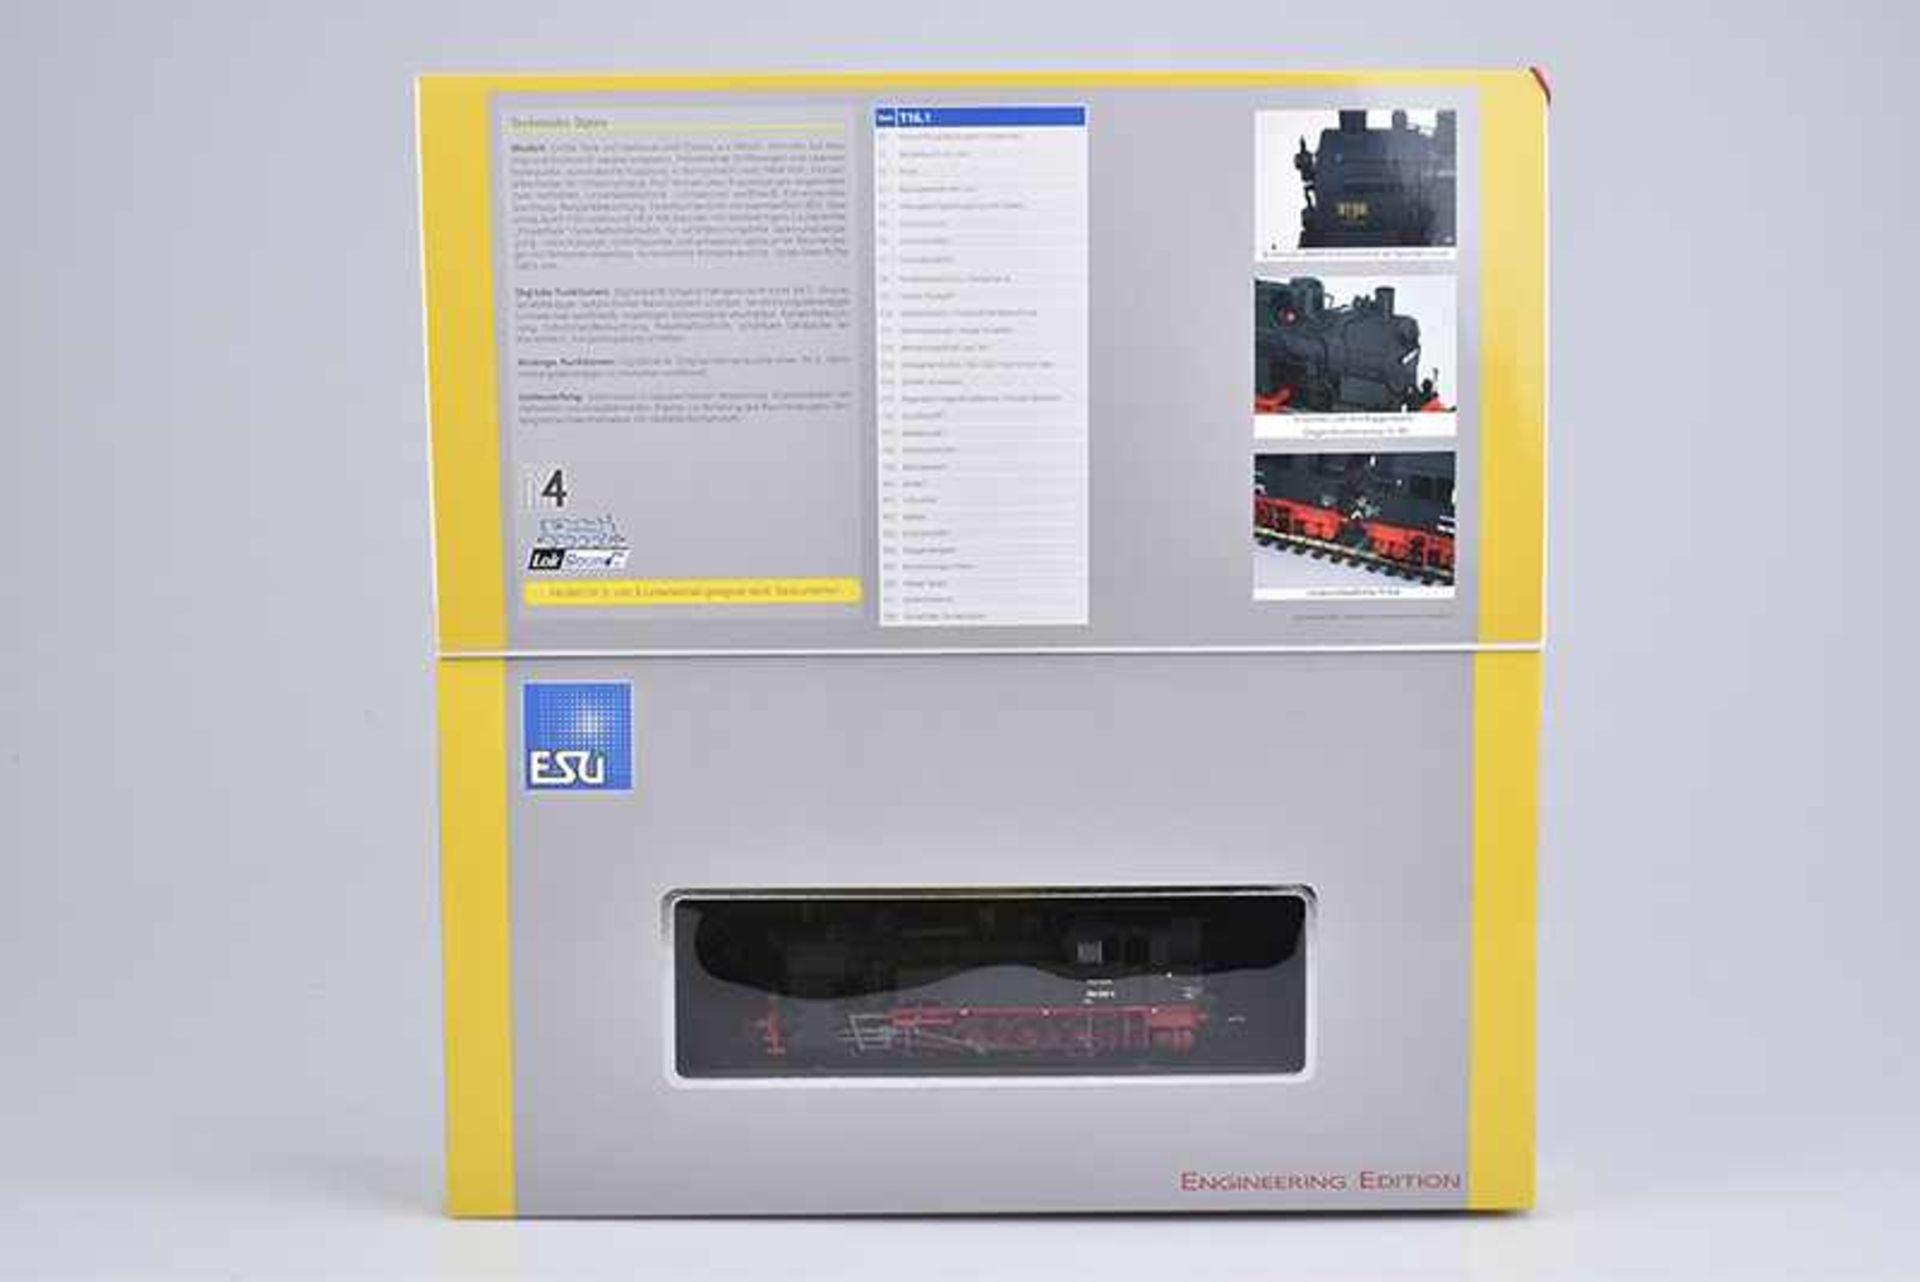 ESU 31102 Dampflok, H0, BN 094 652-5 der DB, Engineering Edition, DC/AC Universalelektronik,